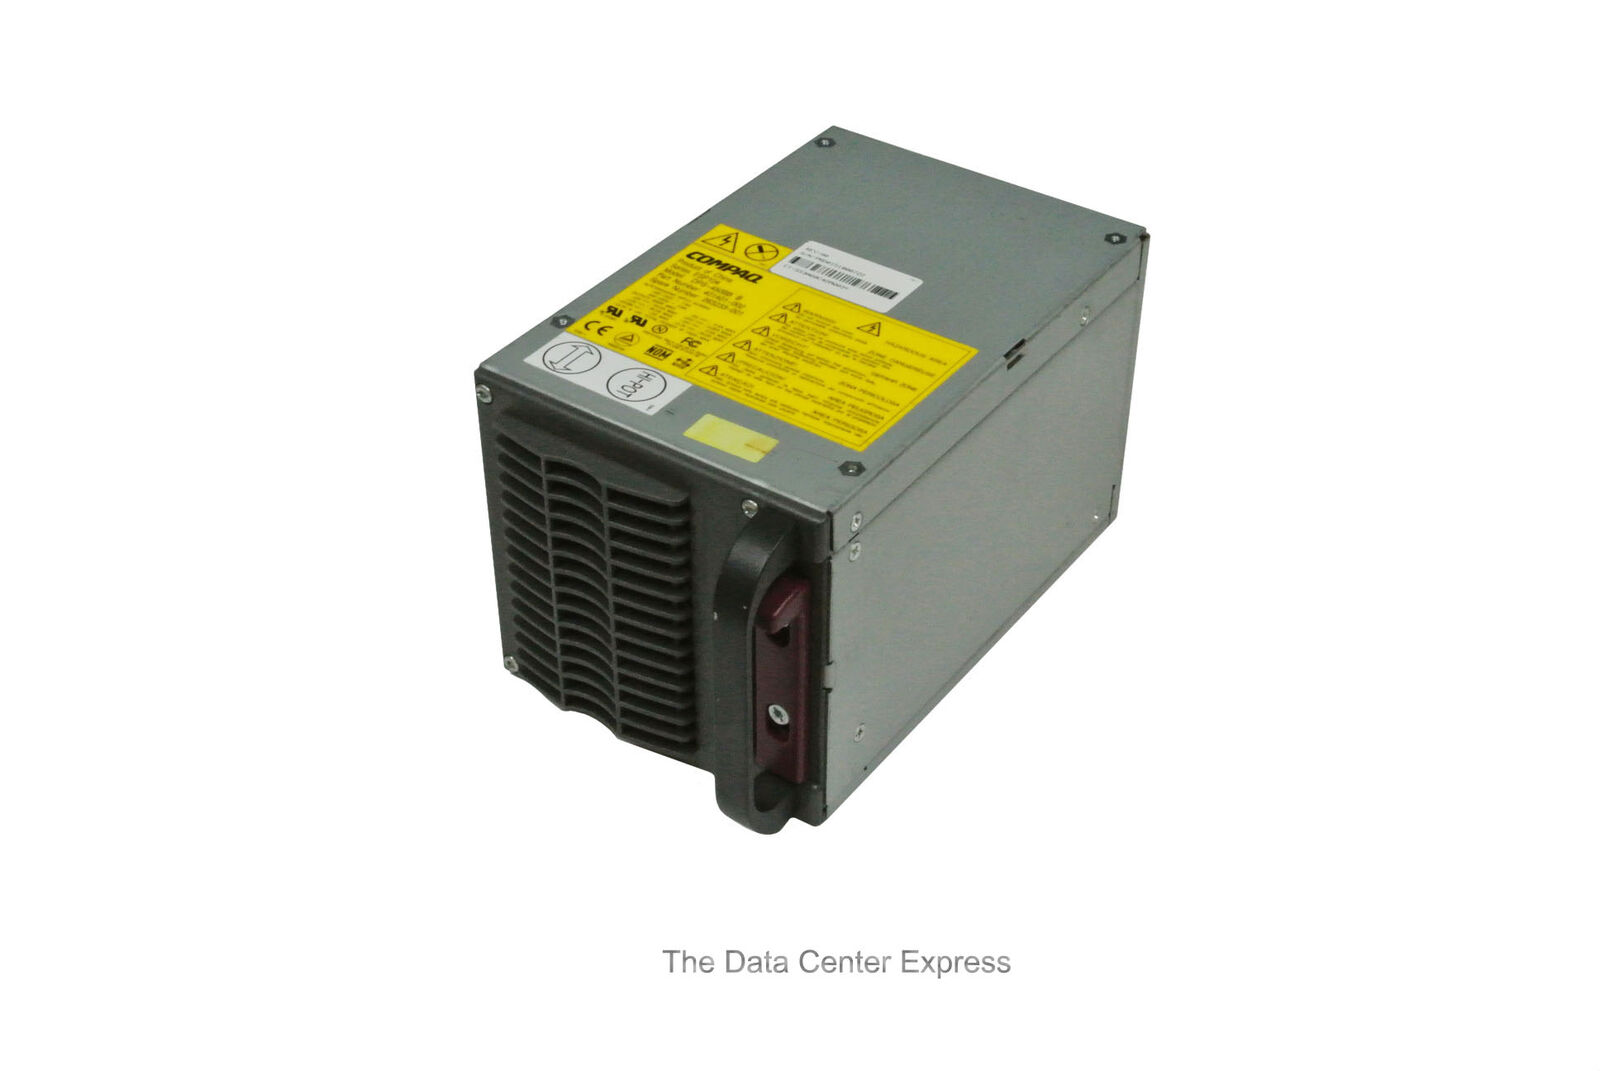 HP Power Supply 450W Executor E7000 263233-001 Seller Refurbished